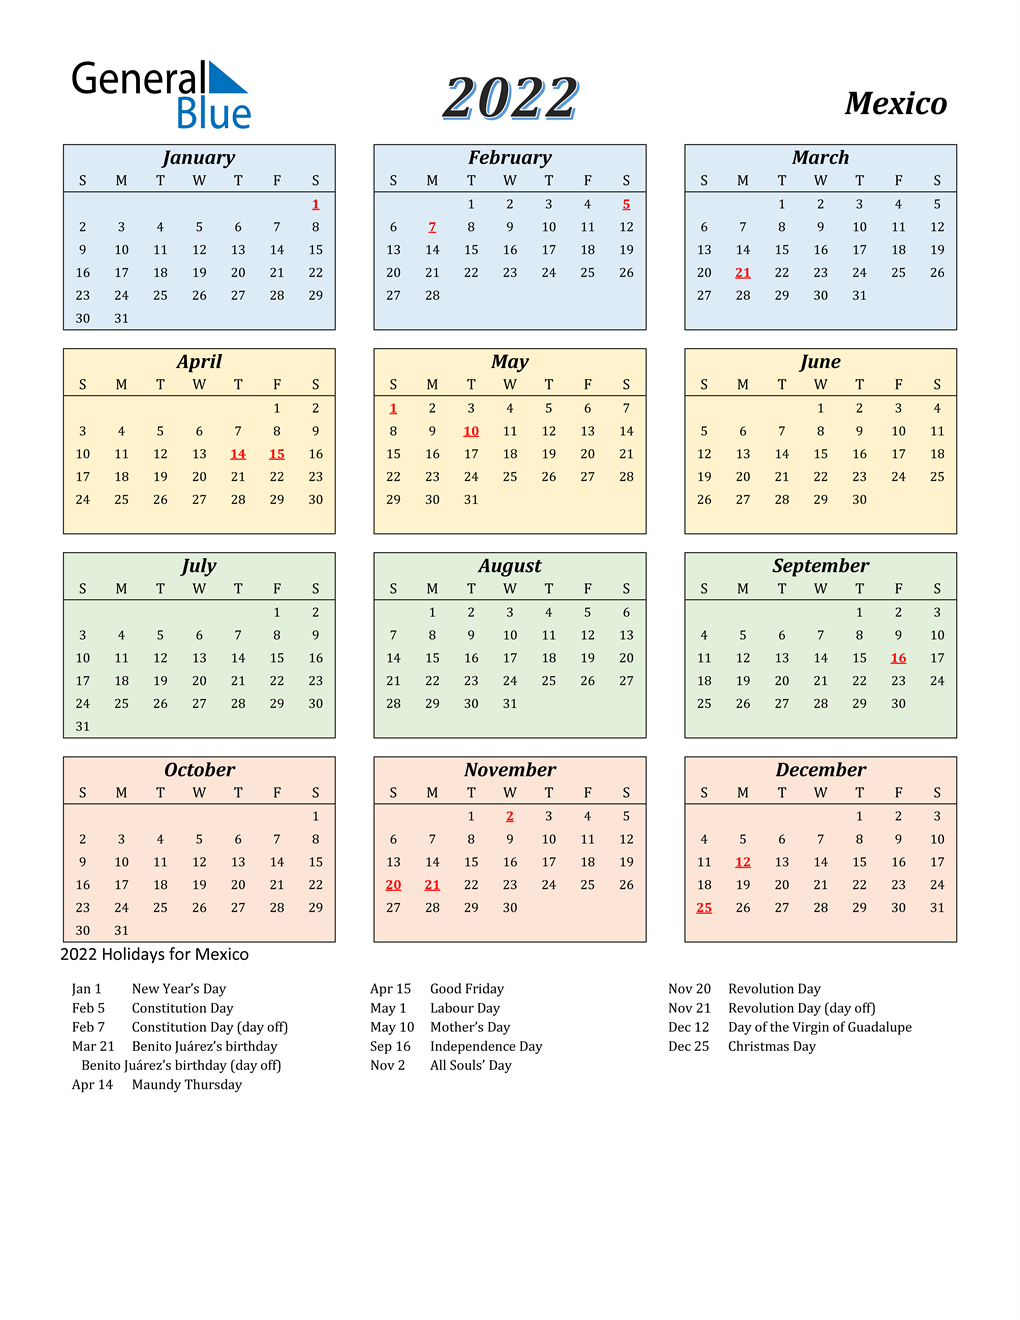 Take Congressional Calendar January 2022